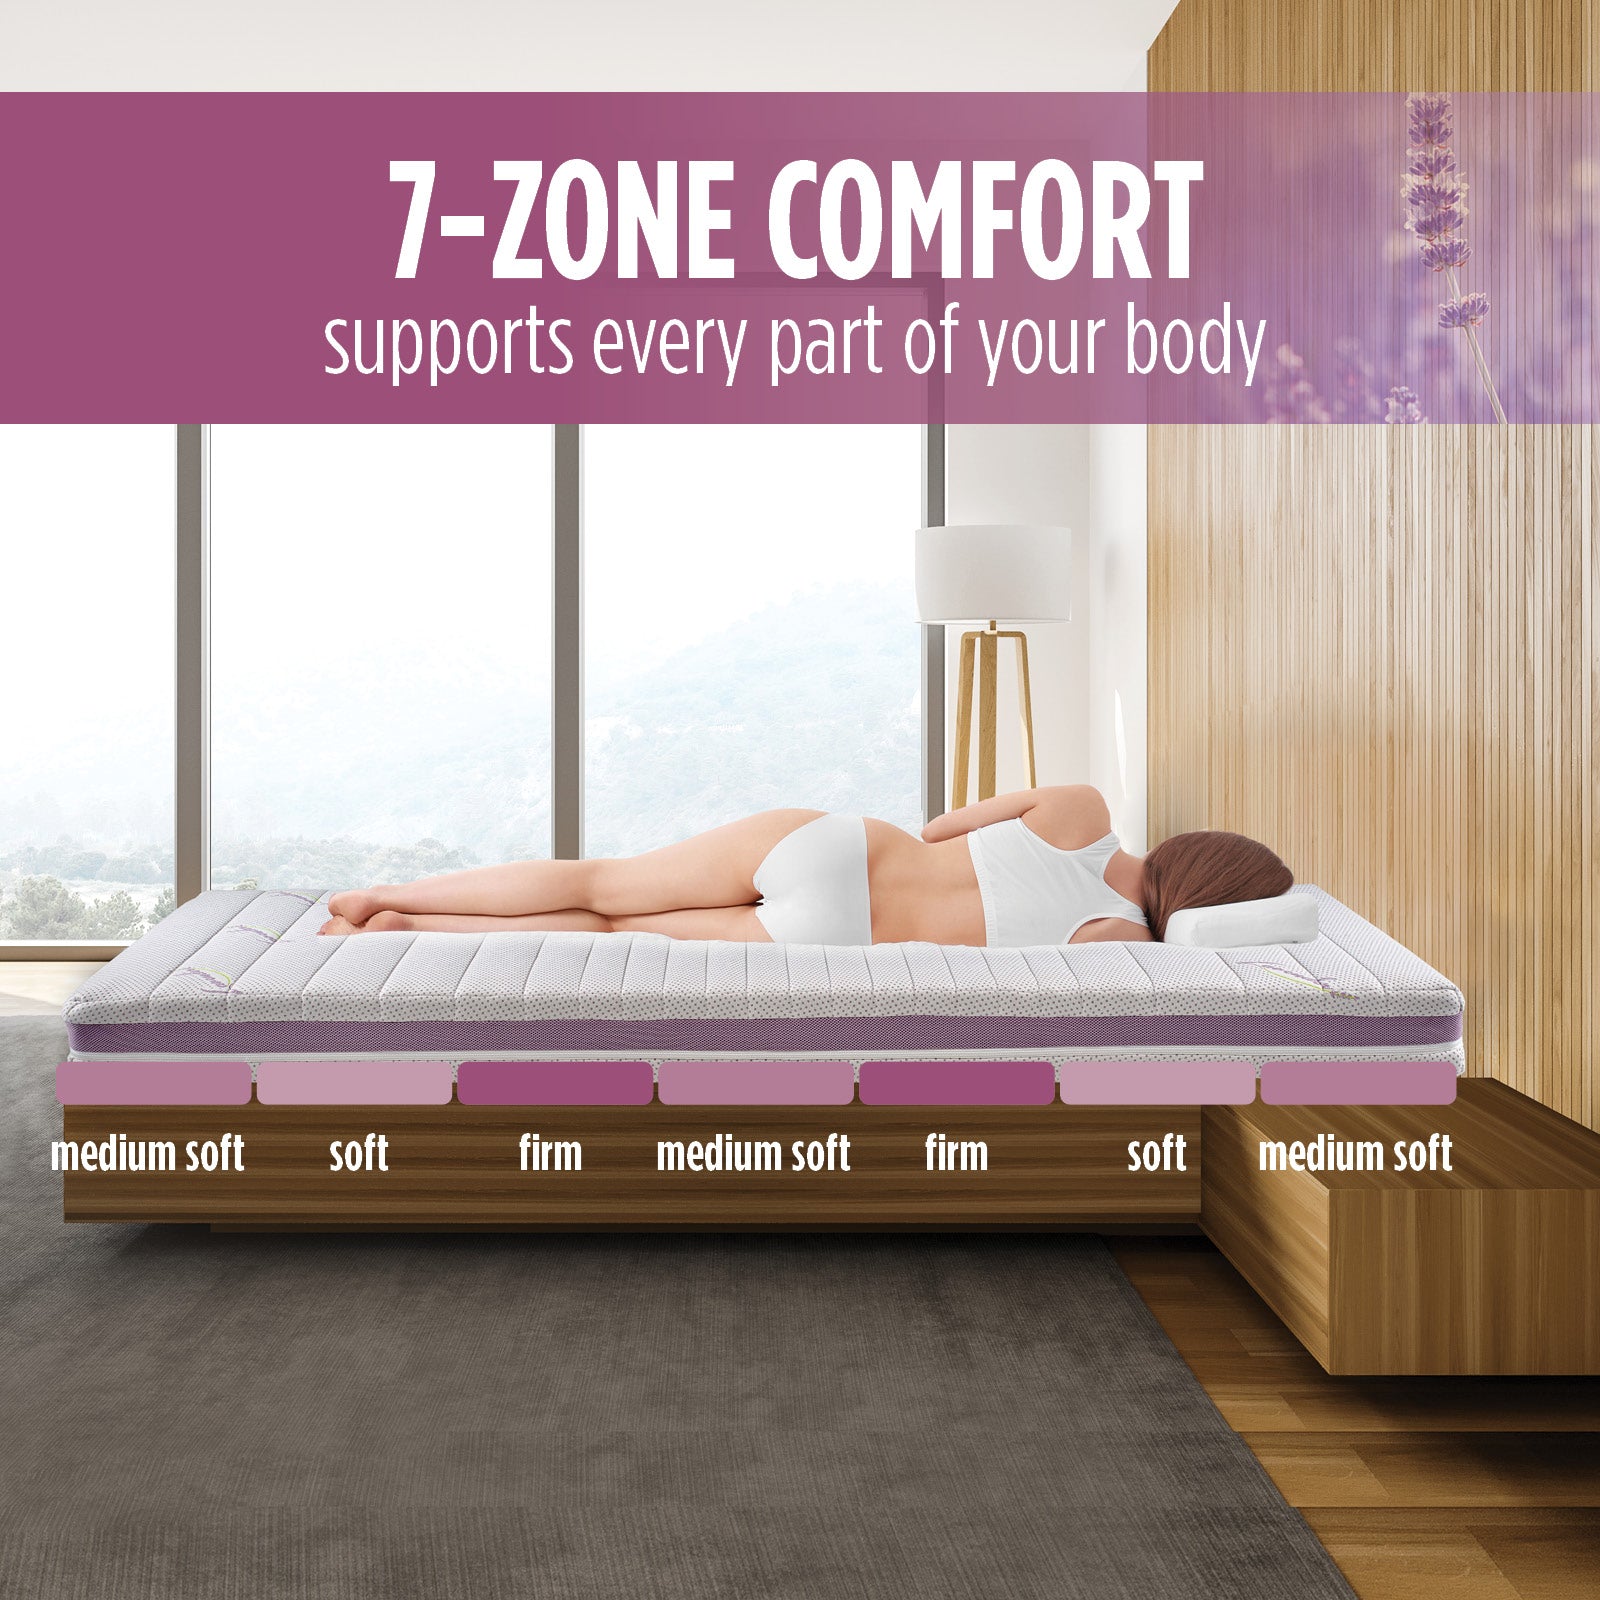 Matracis Lavender Comfort